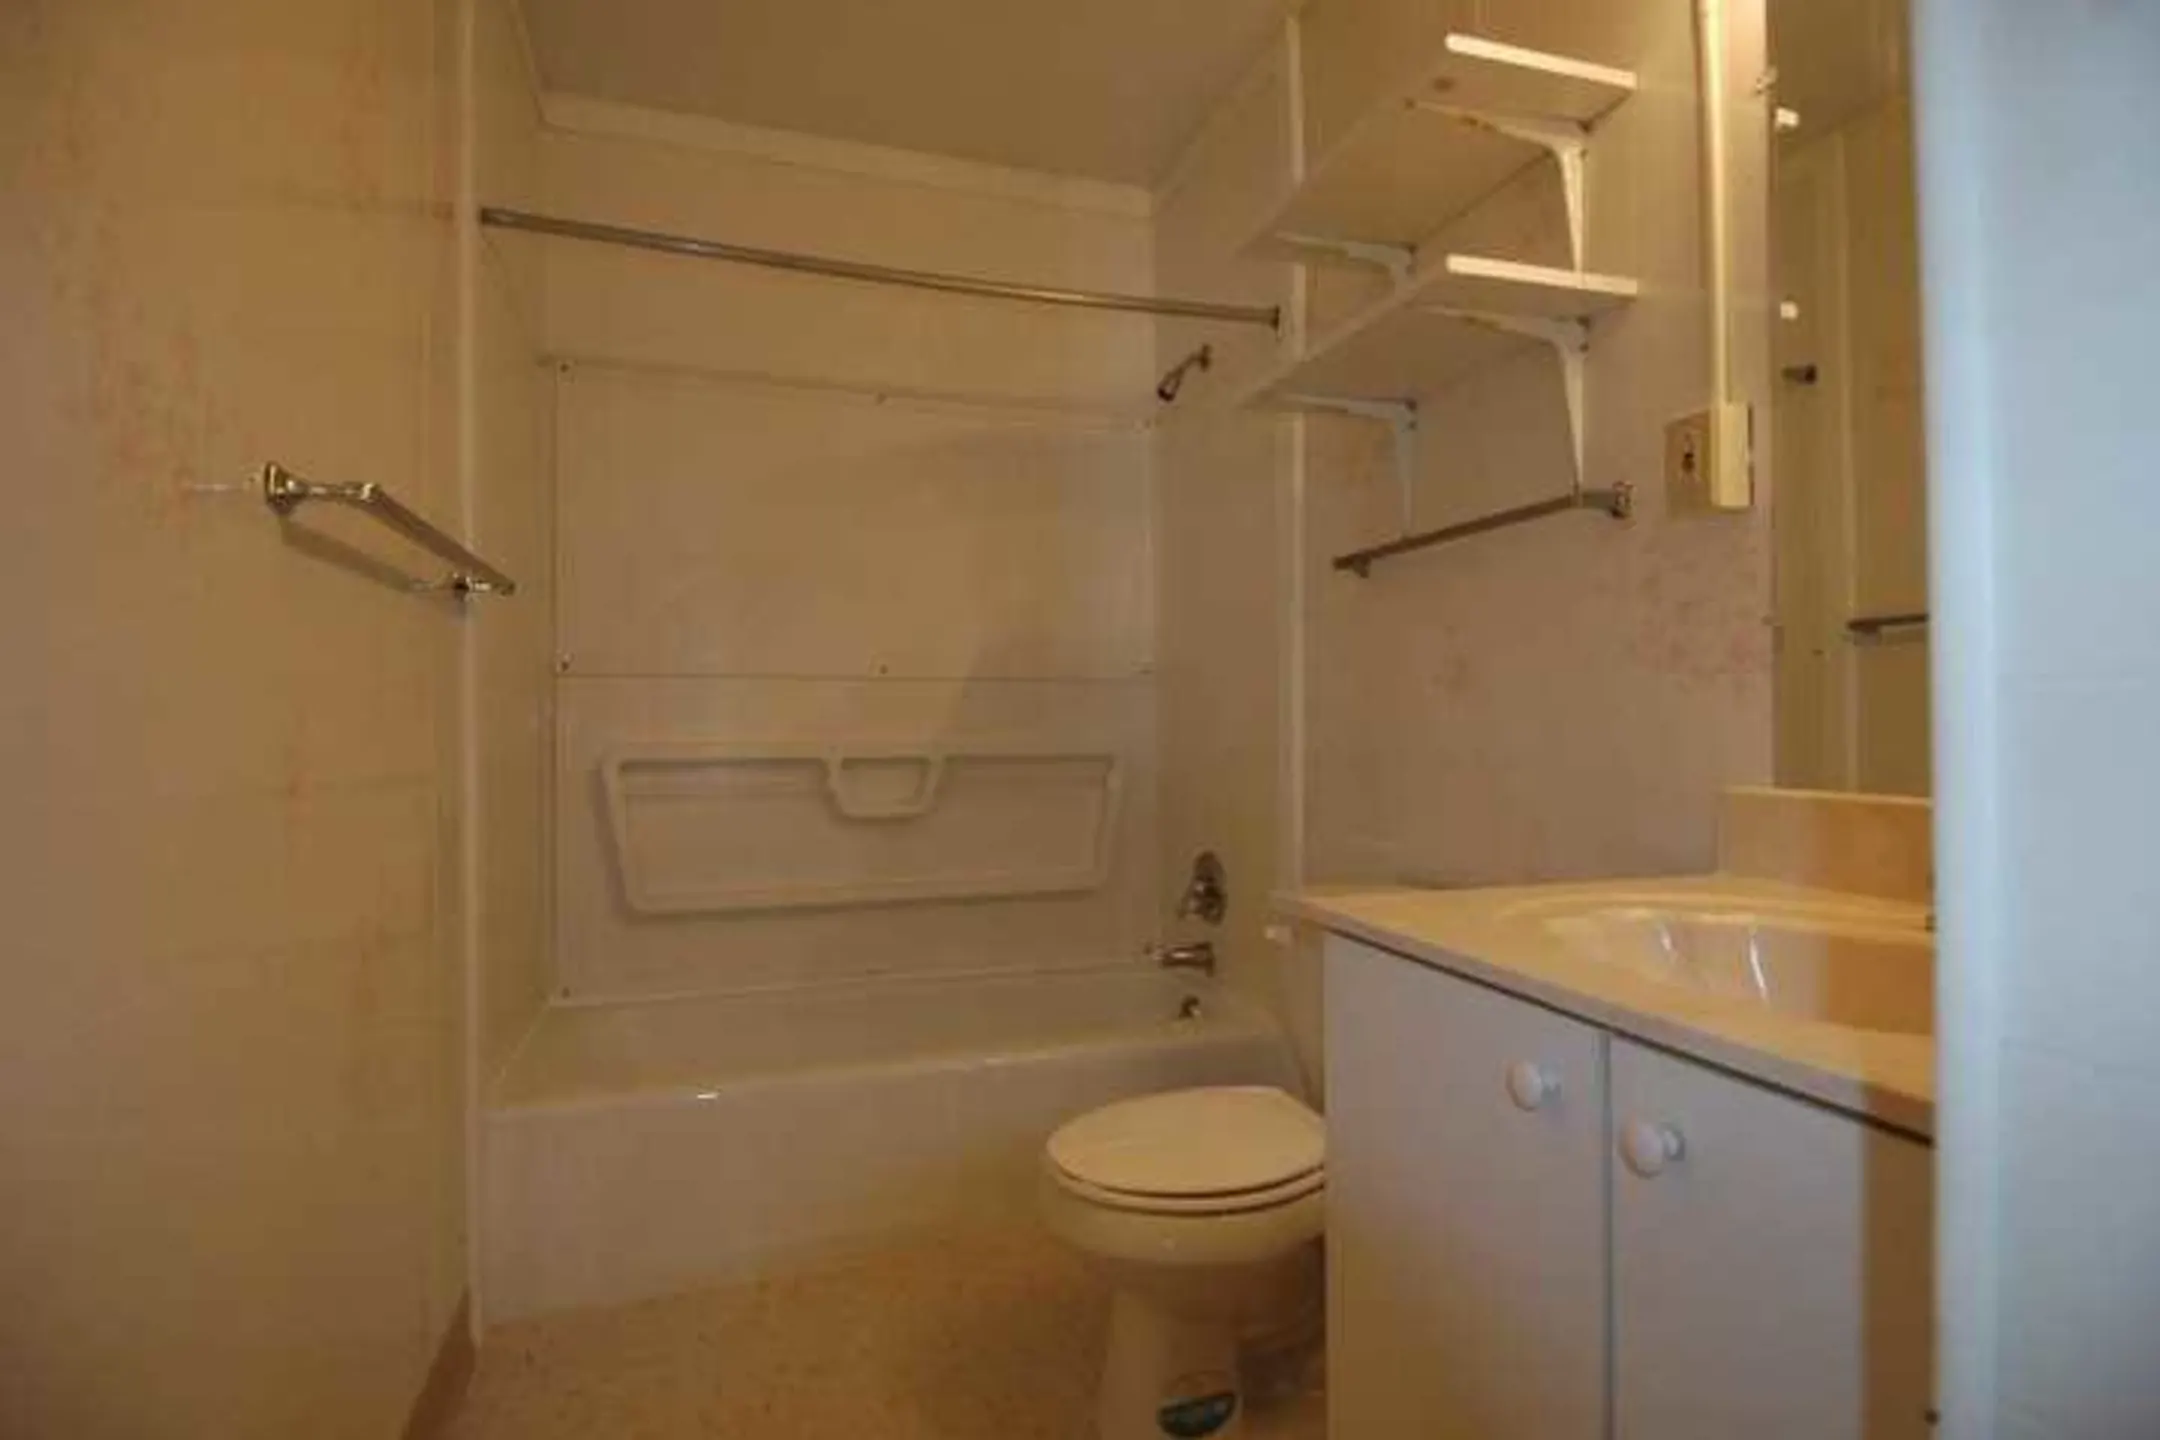 Bathroom - Crestview Apartments - West Lafayette, IN